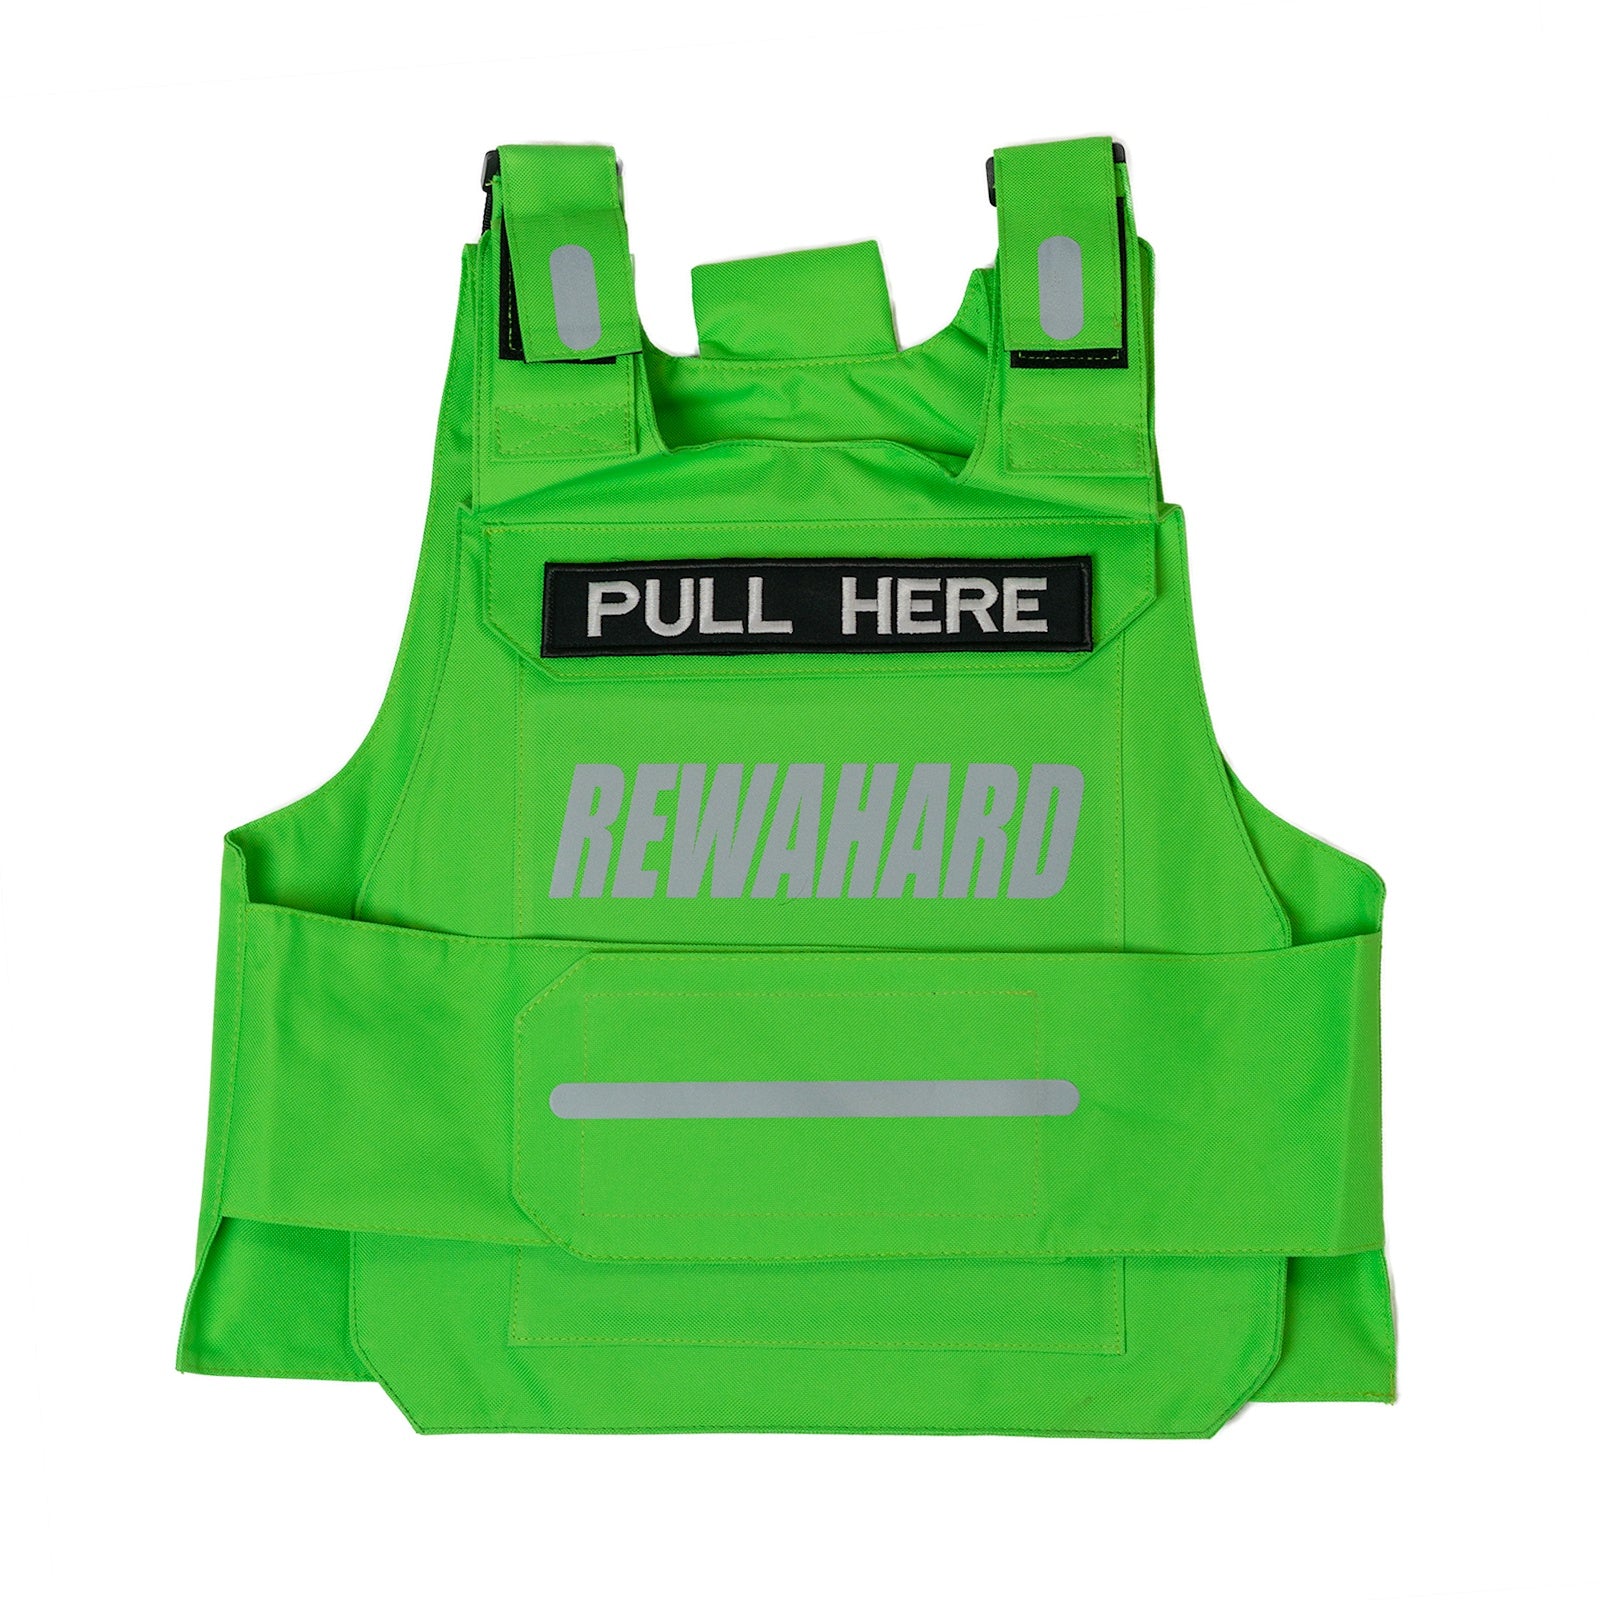 Rewahard Plate Carrier Vest - Fluorescent Green